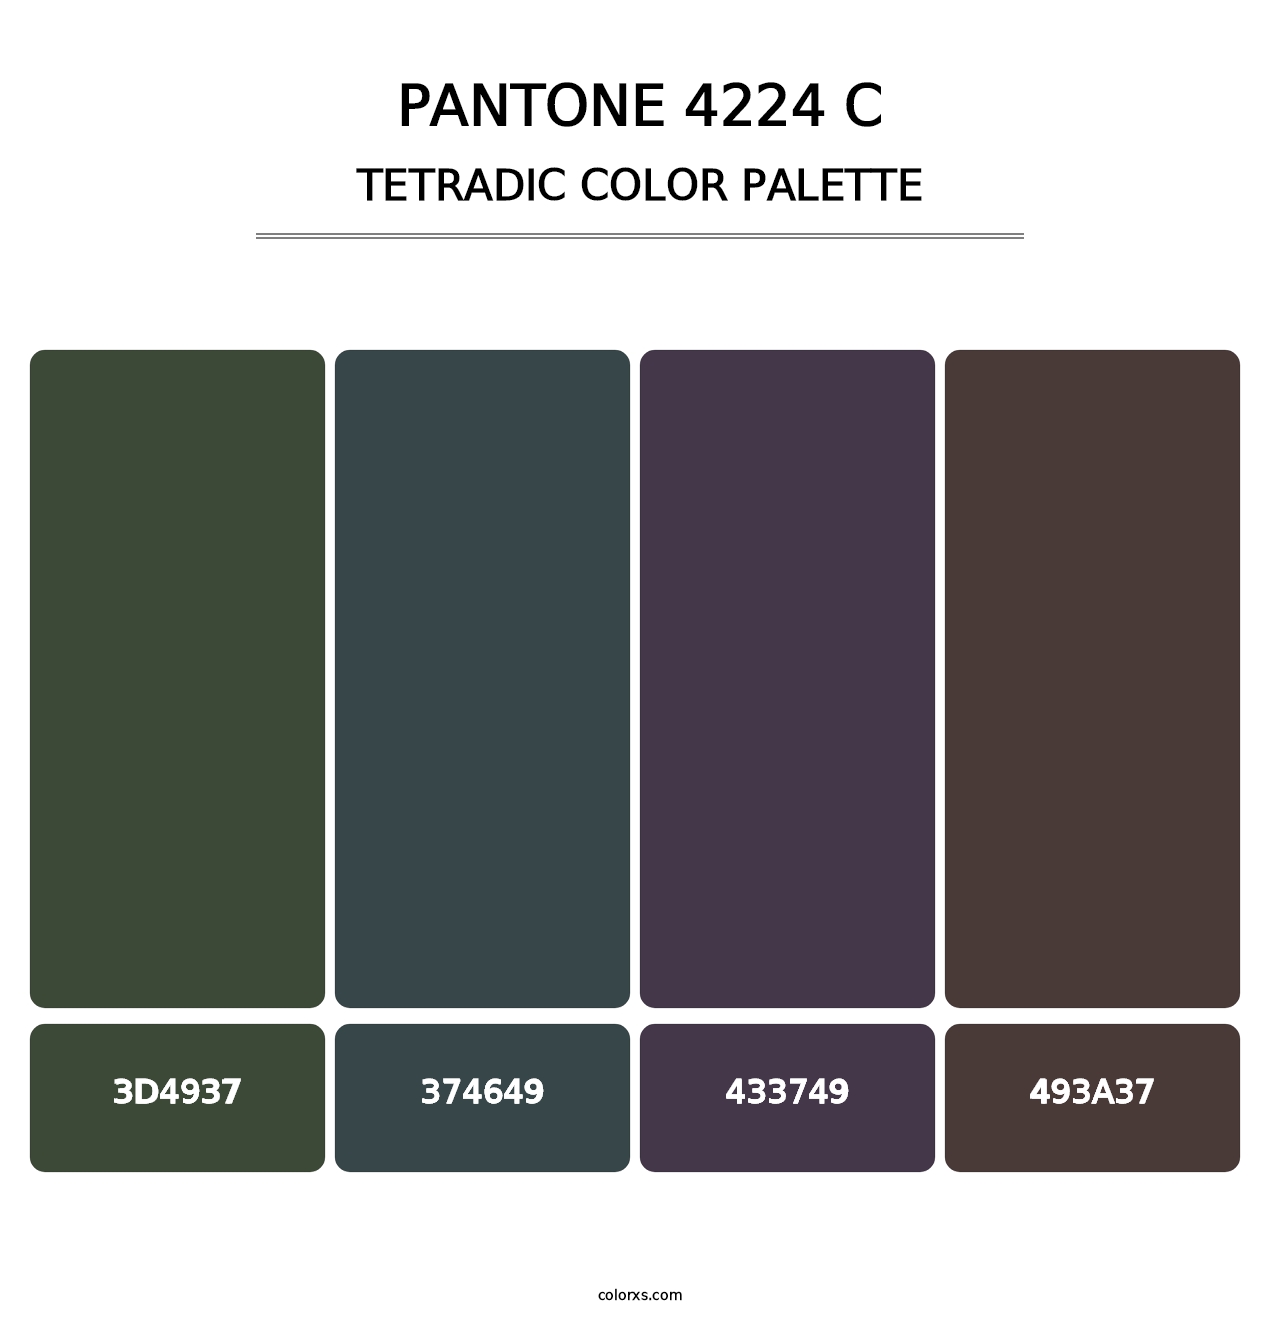 PANTONE 4224 C - Tetradic Color Palette